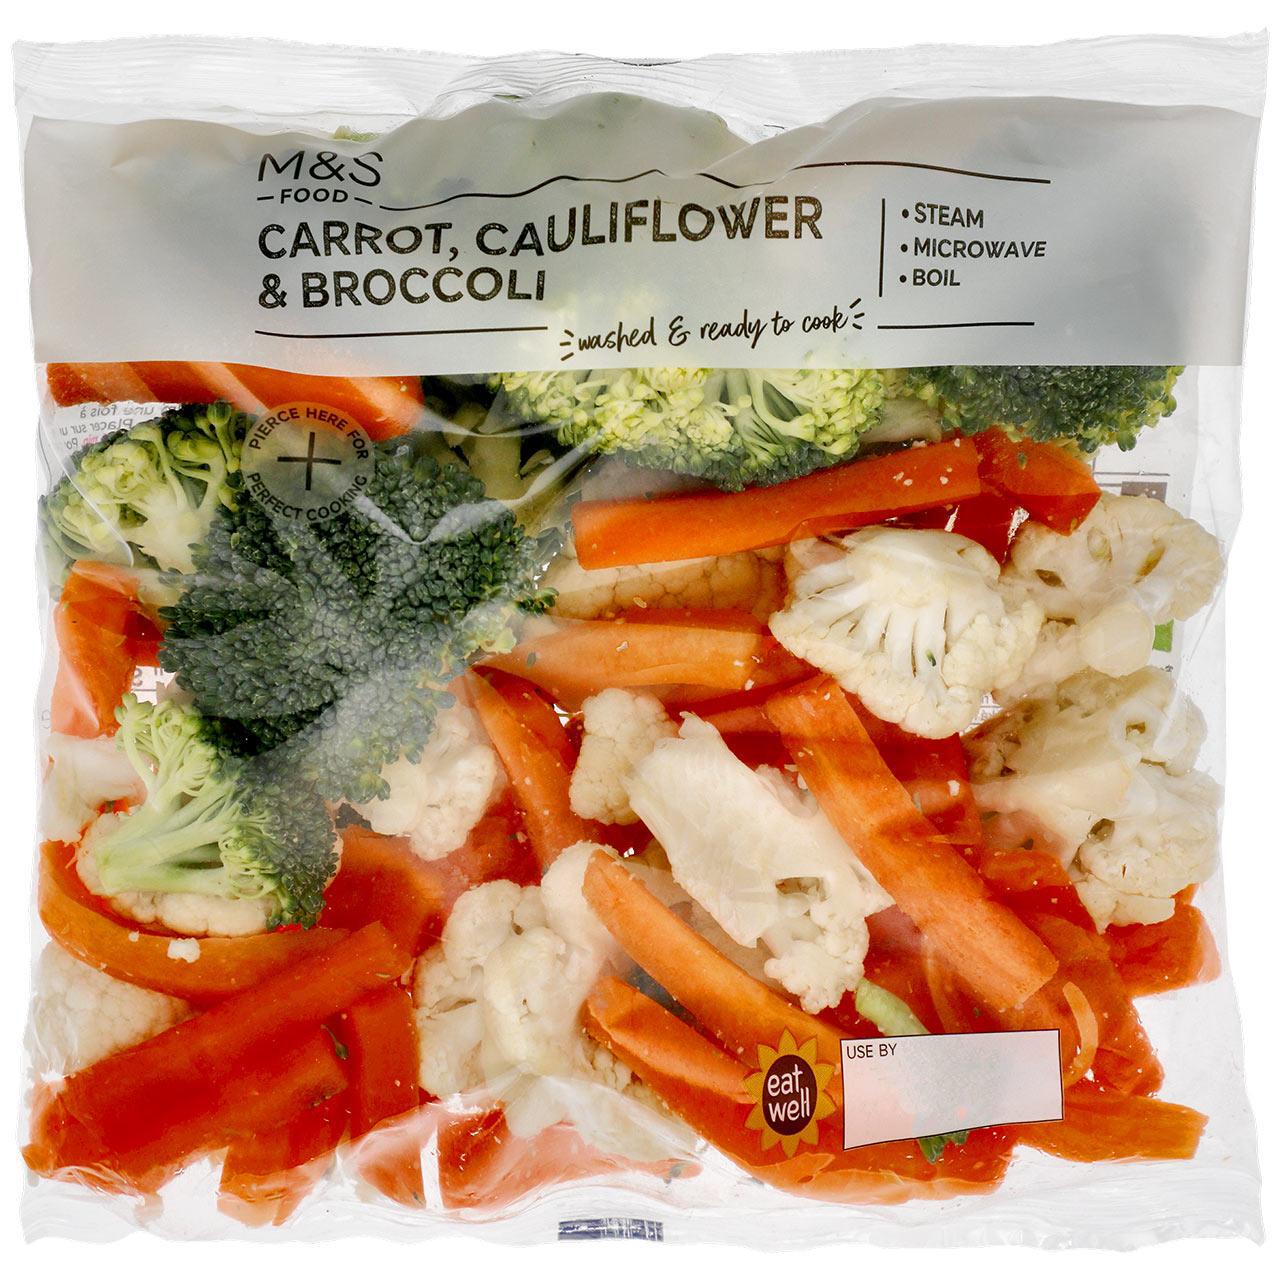 M&S Carrot, Cauliflower & Broccoli 500g